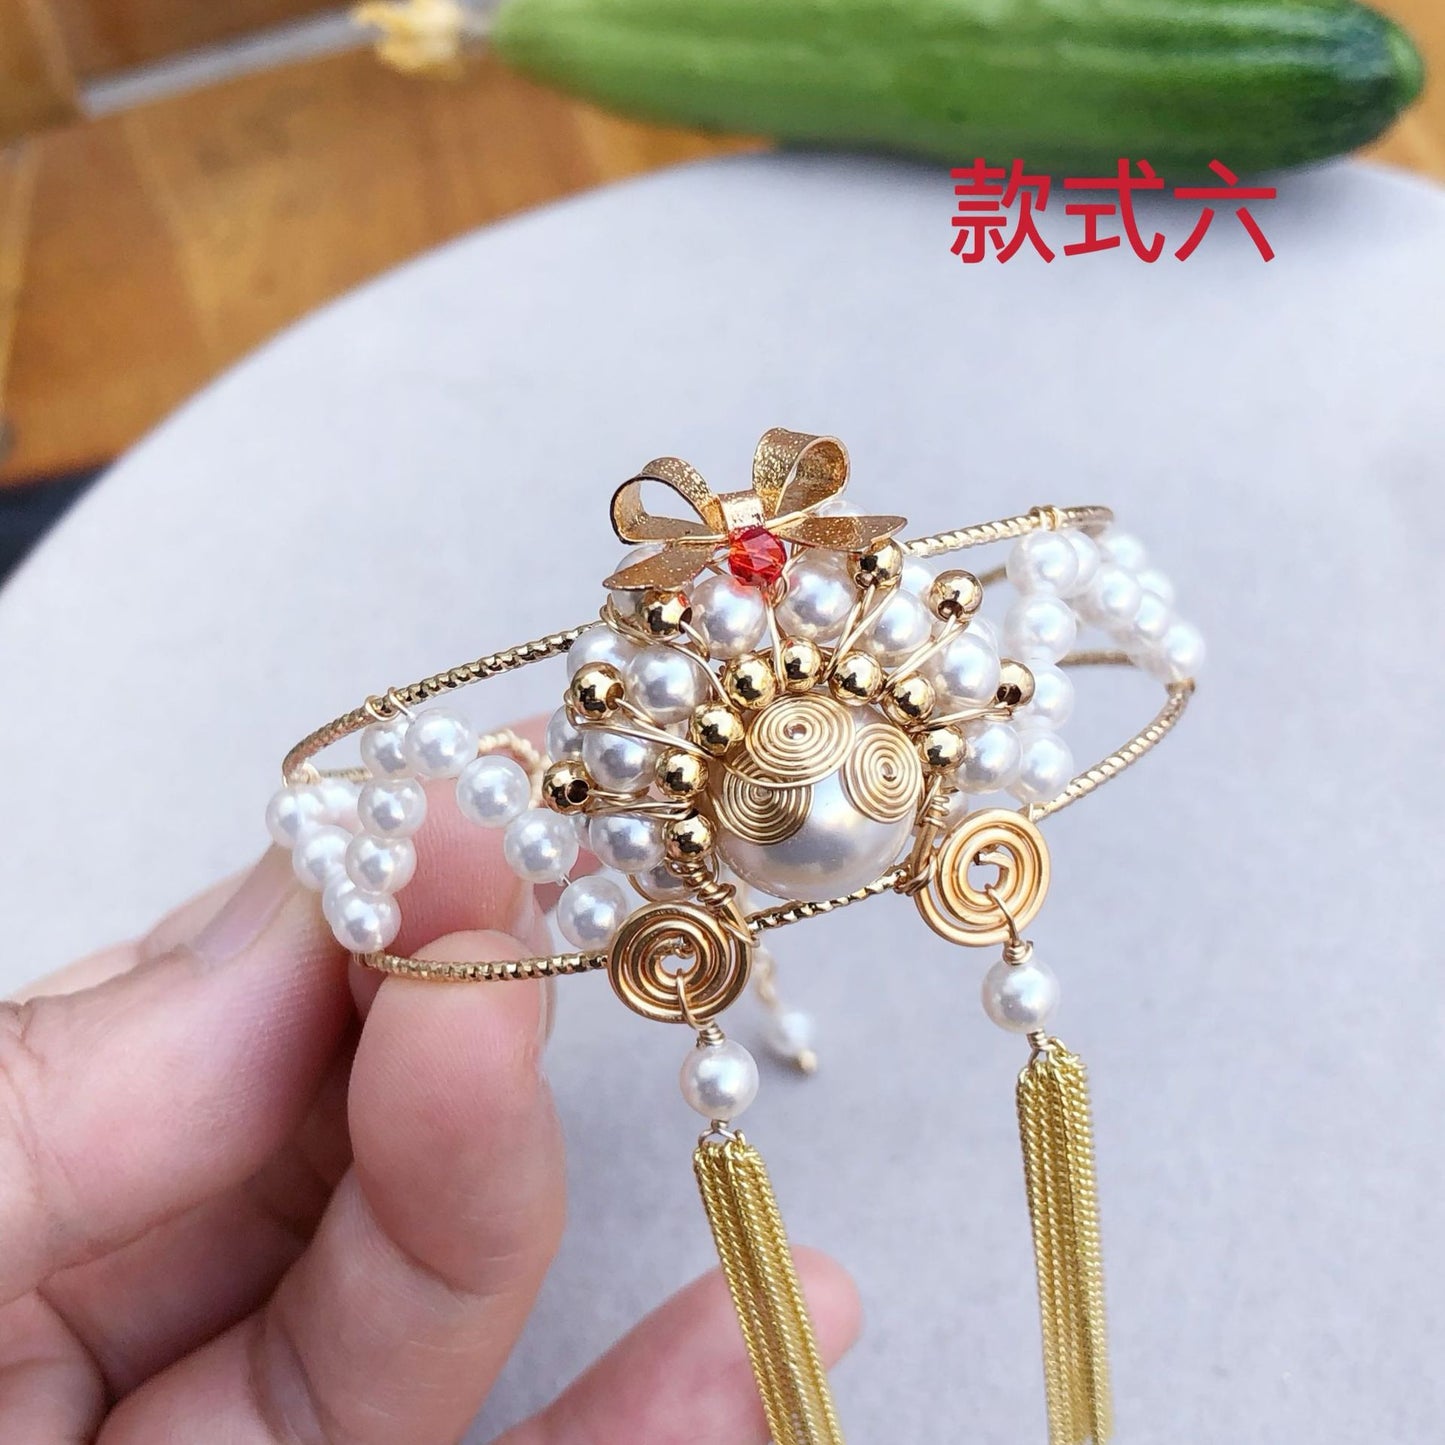 Handmade Chinese style culture bracelet design Peking Opera custom personalized birthday gift accessories